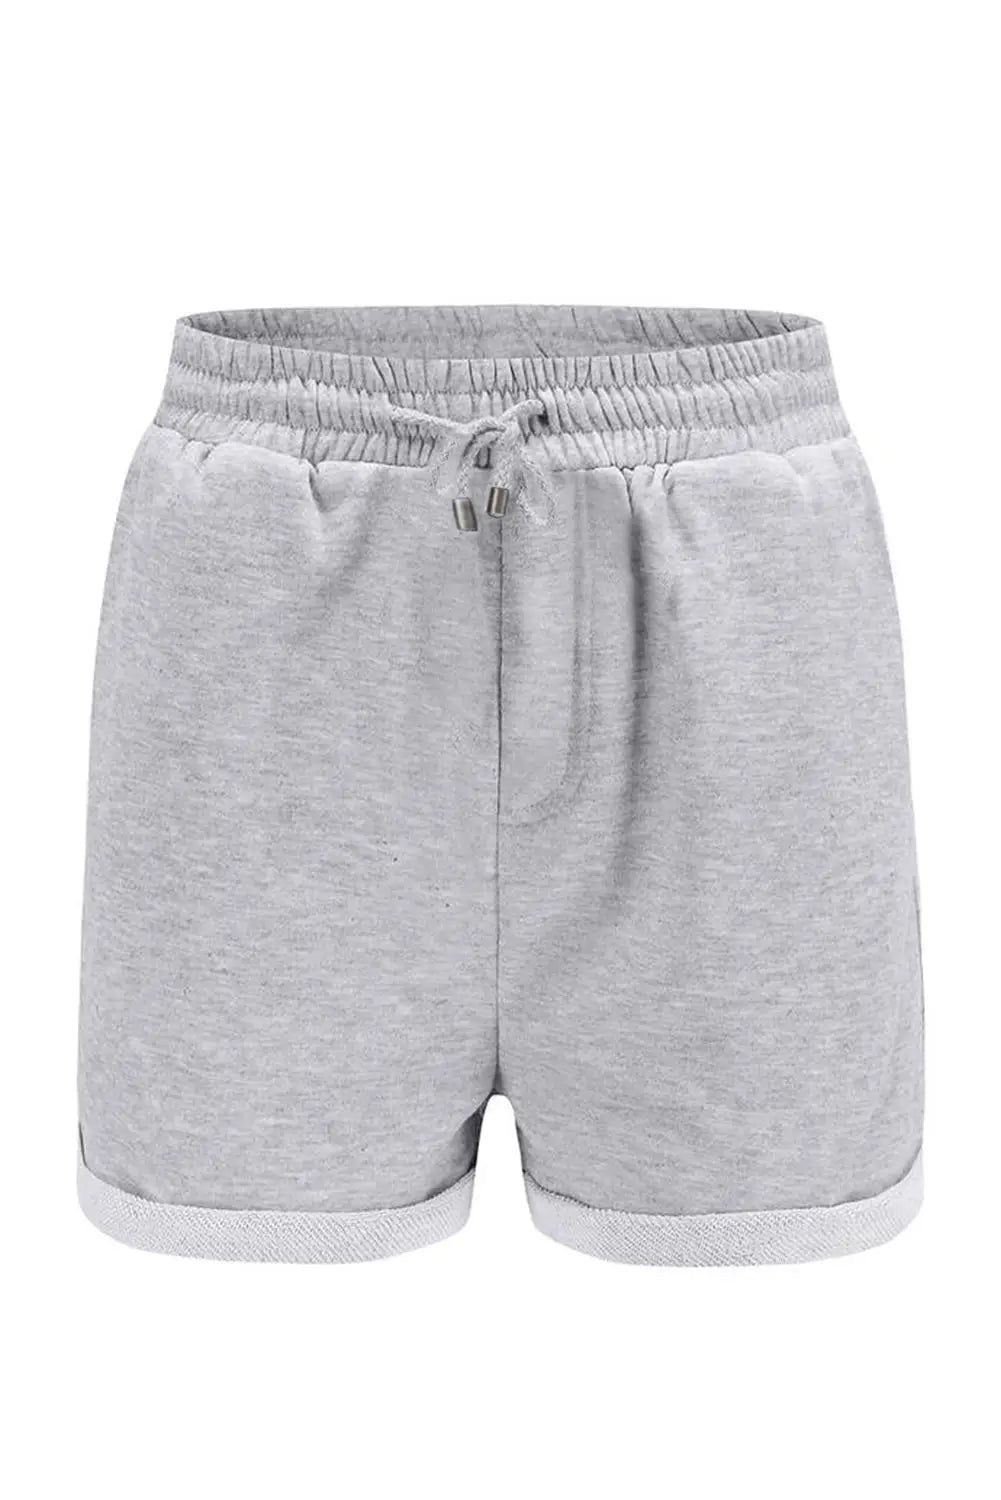 Gray tie waist side pockets cuffed lounge shorts